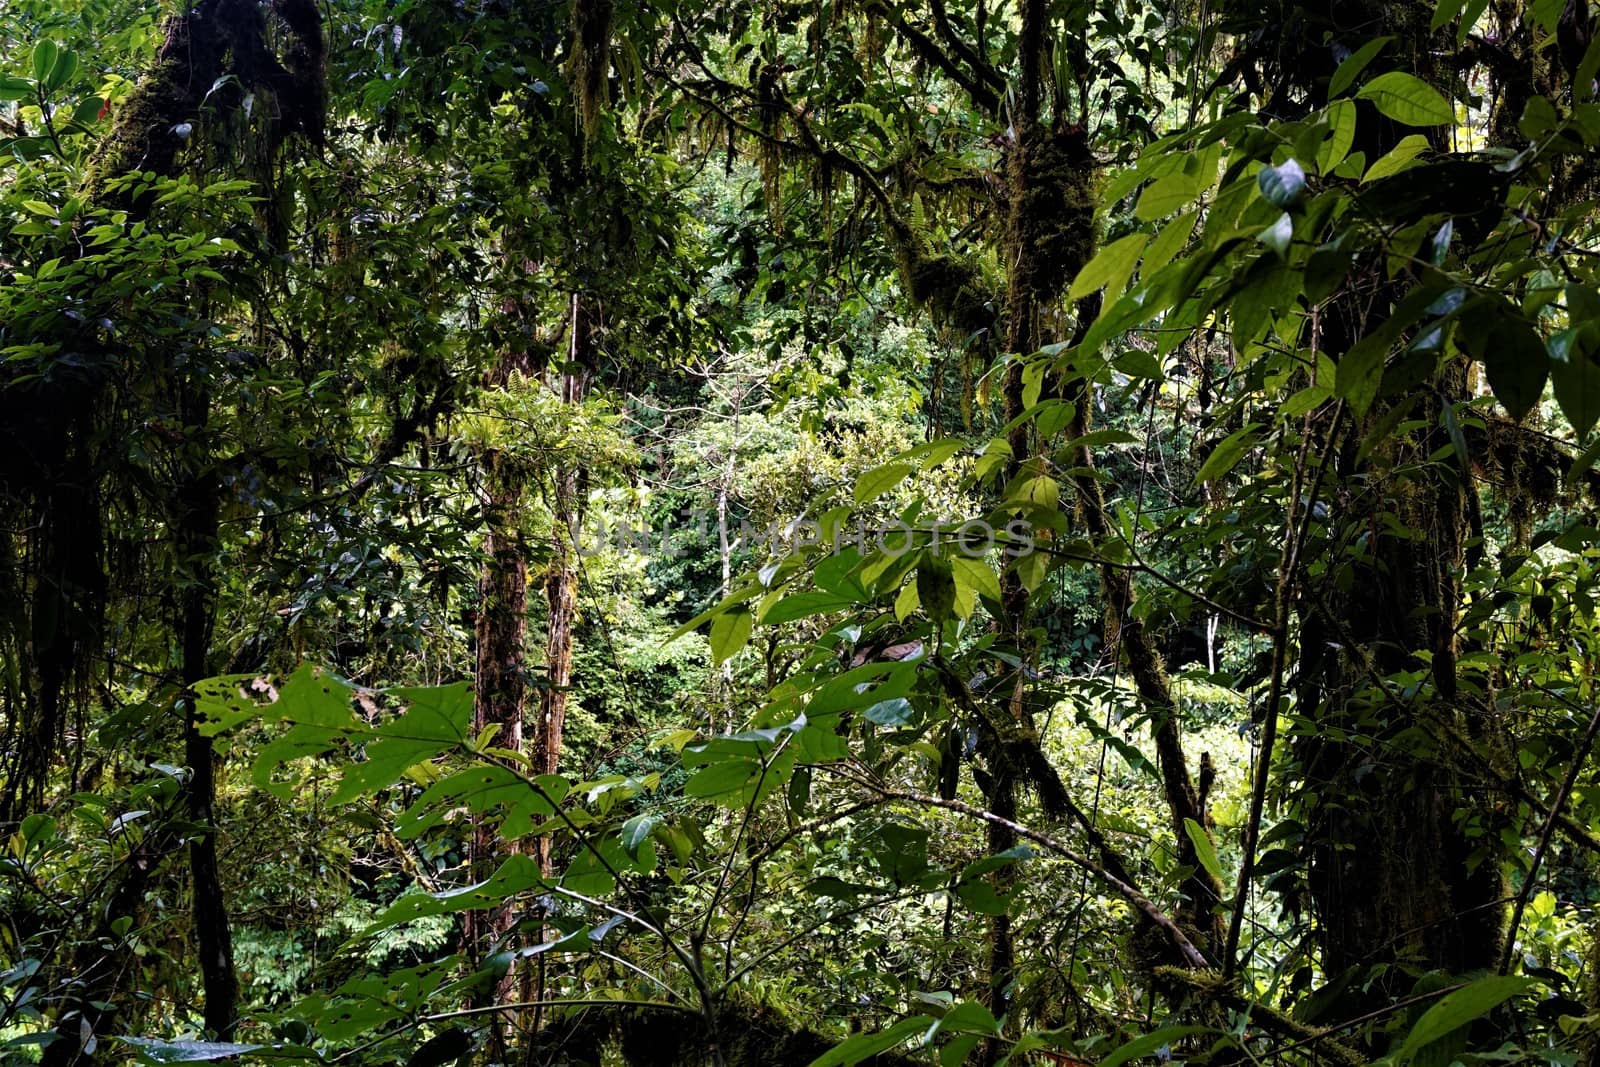 Mossy rainforest spotted in Las Quebradas, Costa Rica